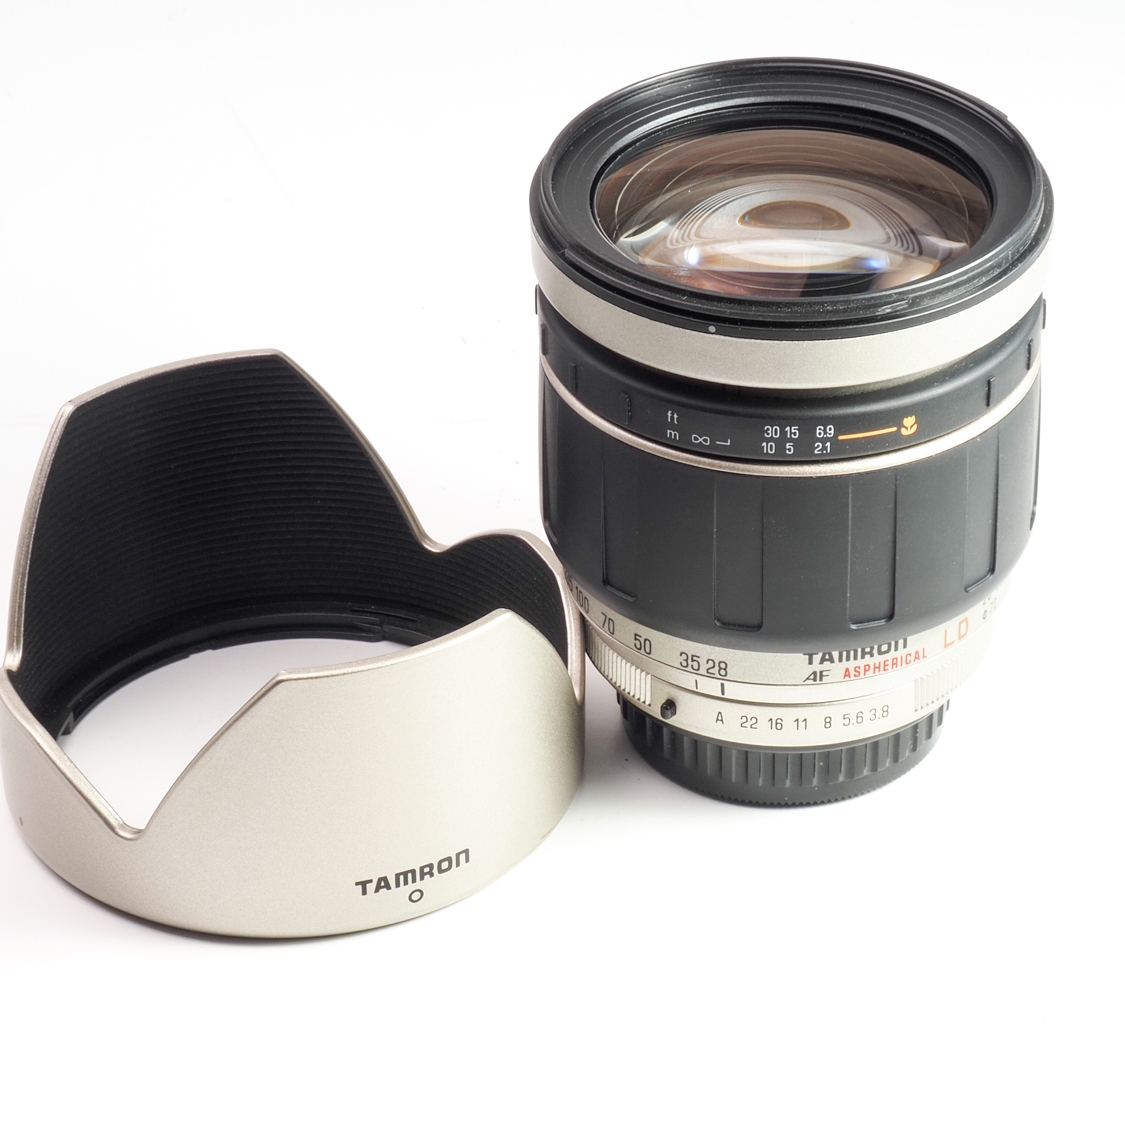 Tamron 28-300mm F3.8-5.6 LD IF (271D) (BGN) Used Lens for Pentax K Mount